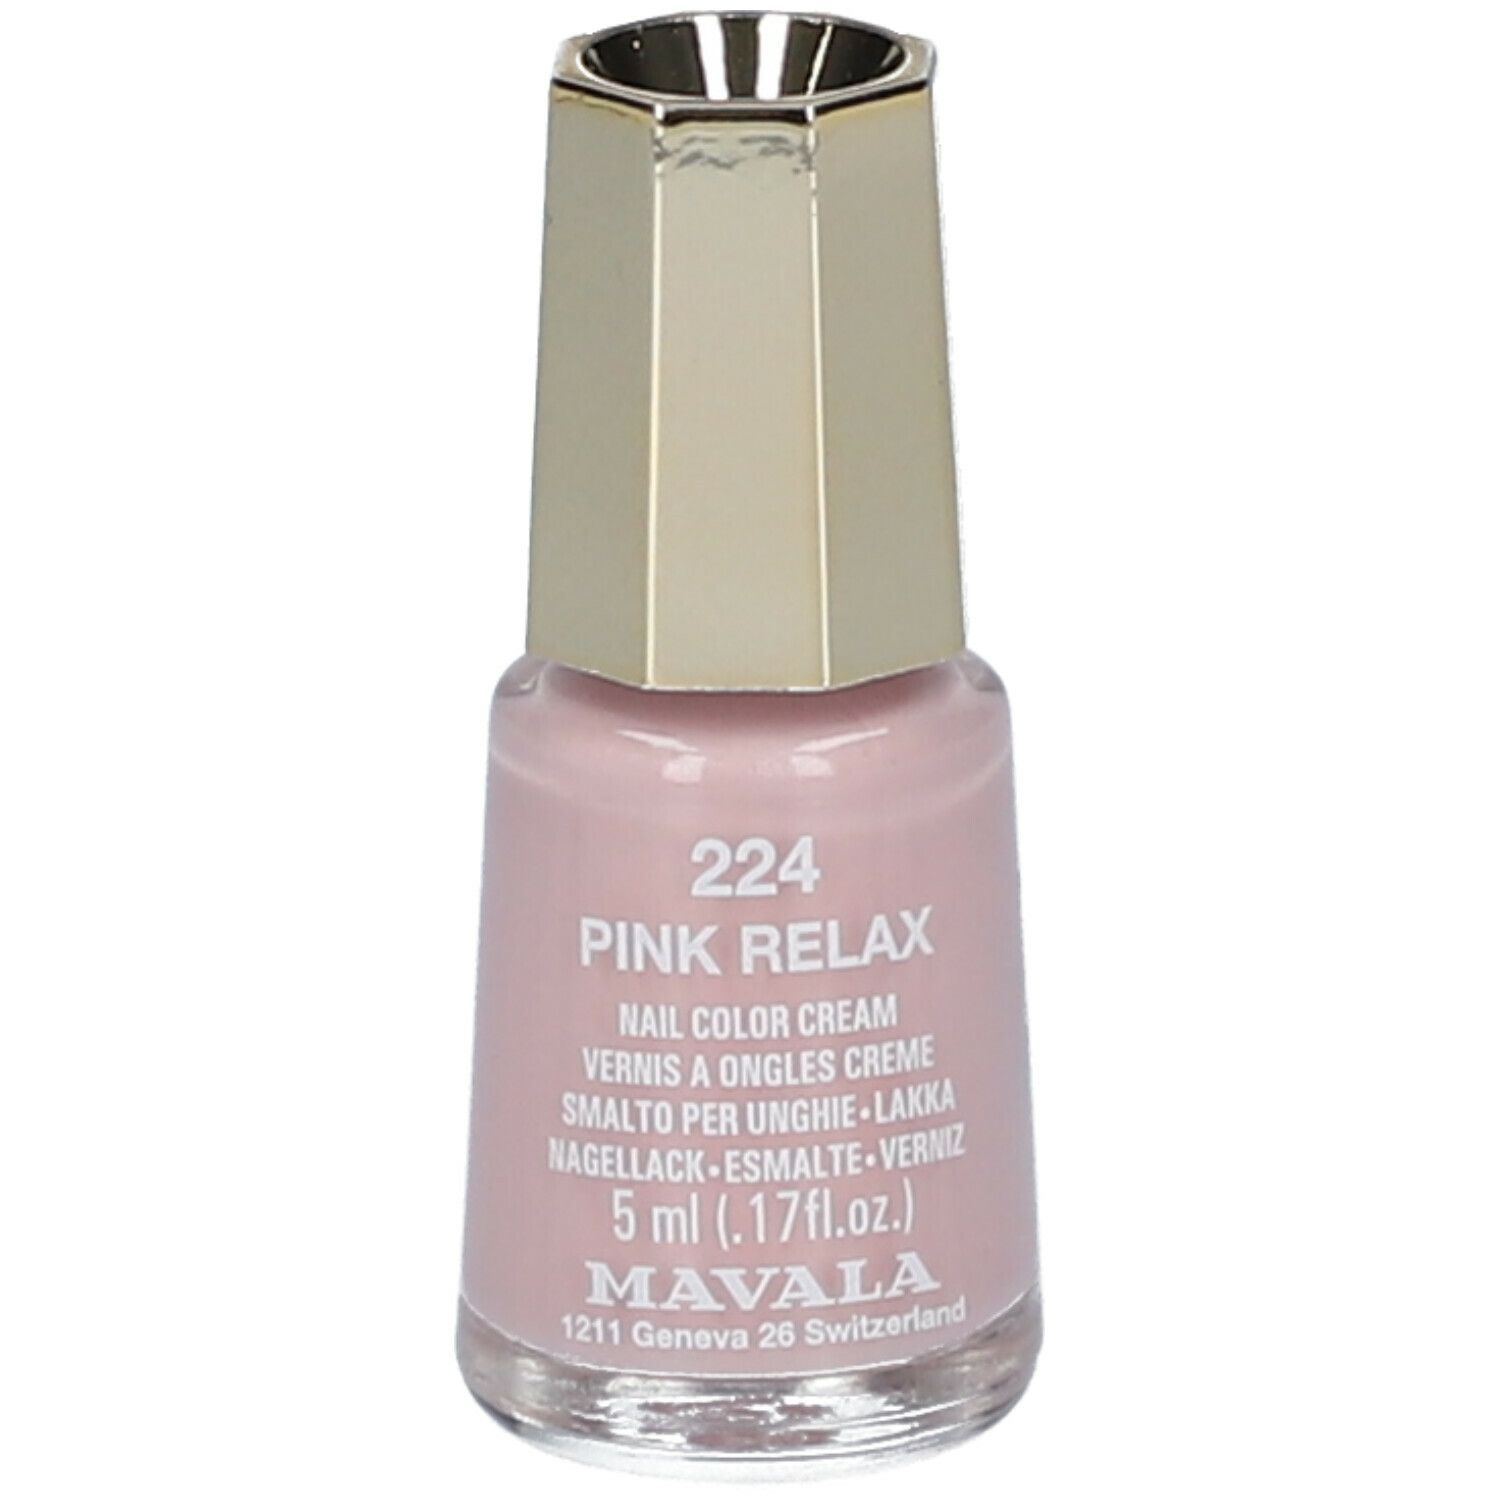 Mavala Mini Color vernis à ongles crème - Pink Relax 224